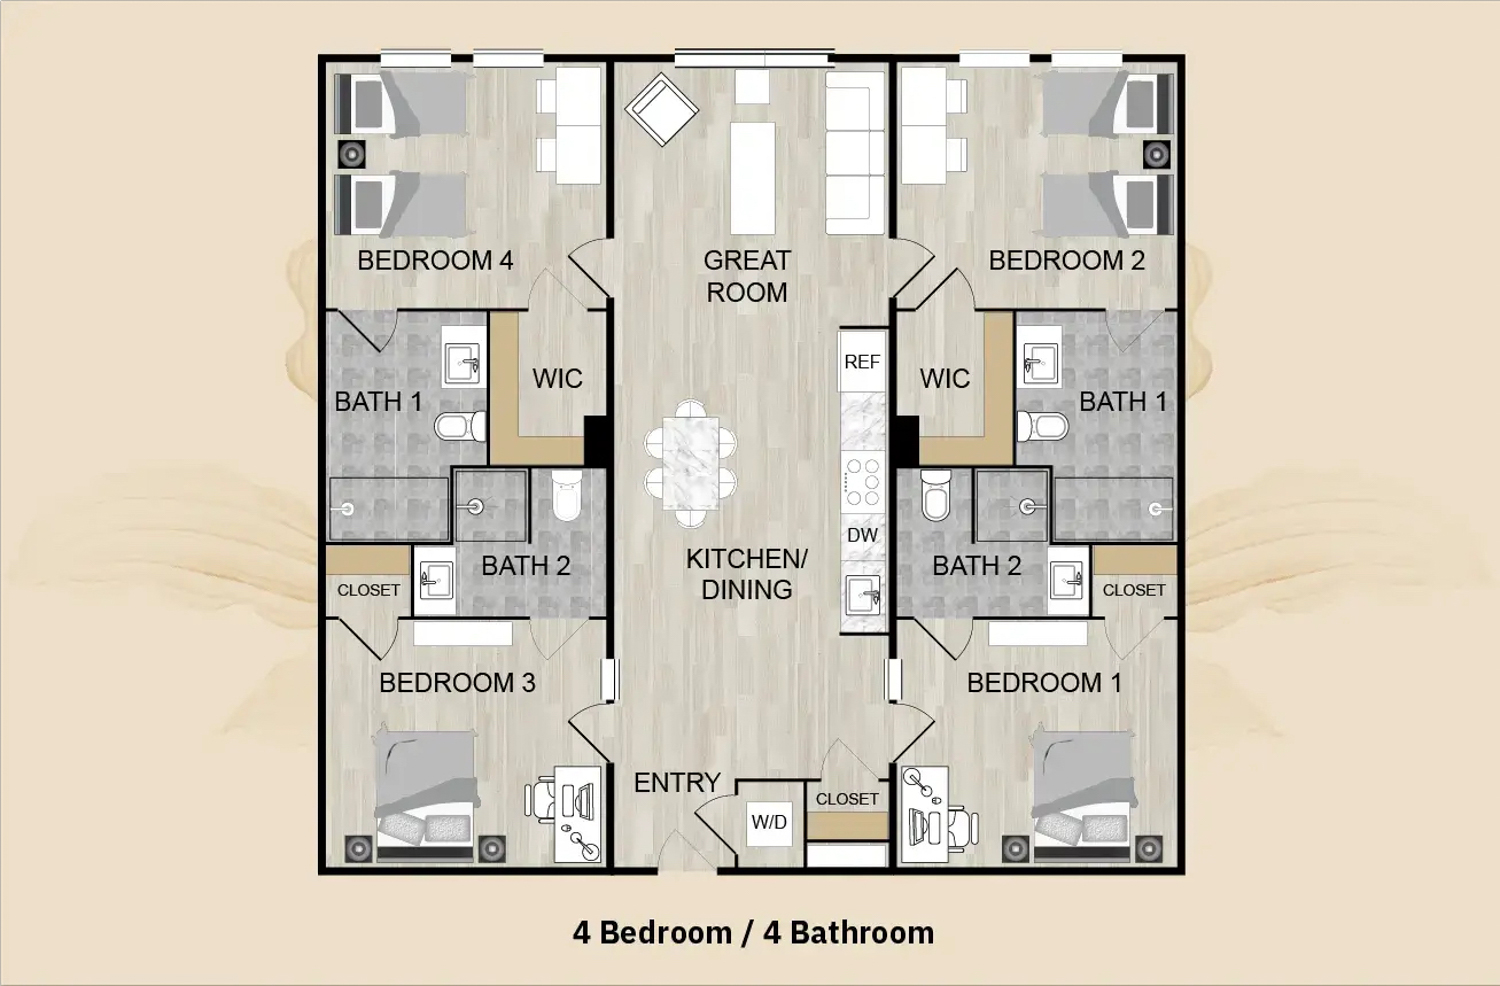 The Refuge apartment floor plan, illustration by PadStyler